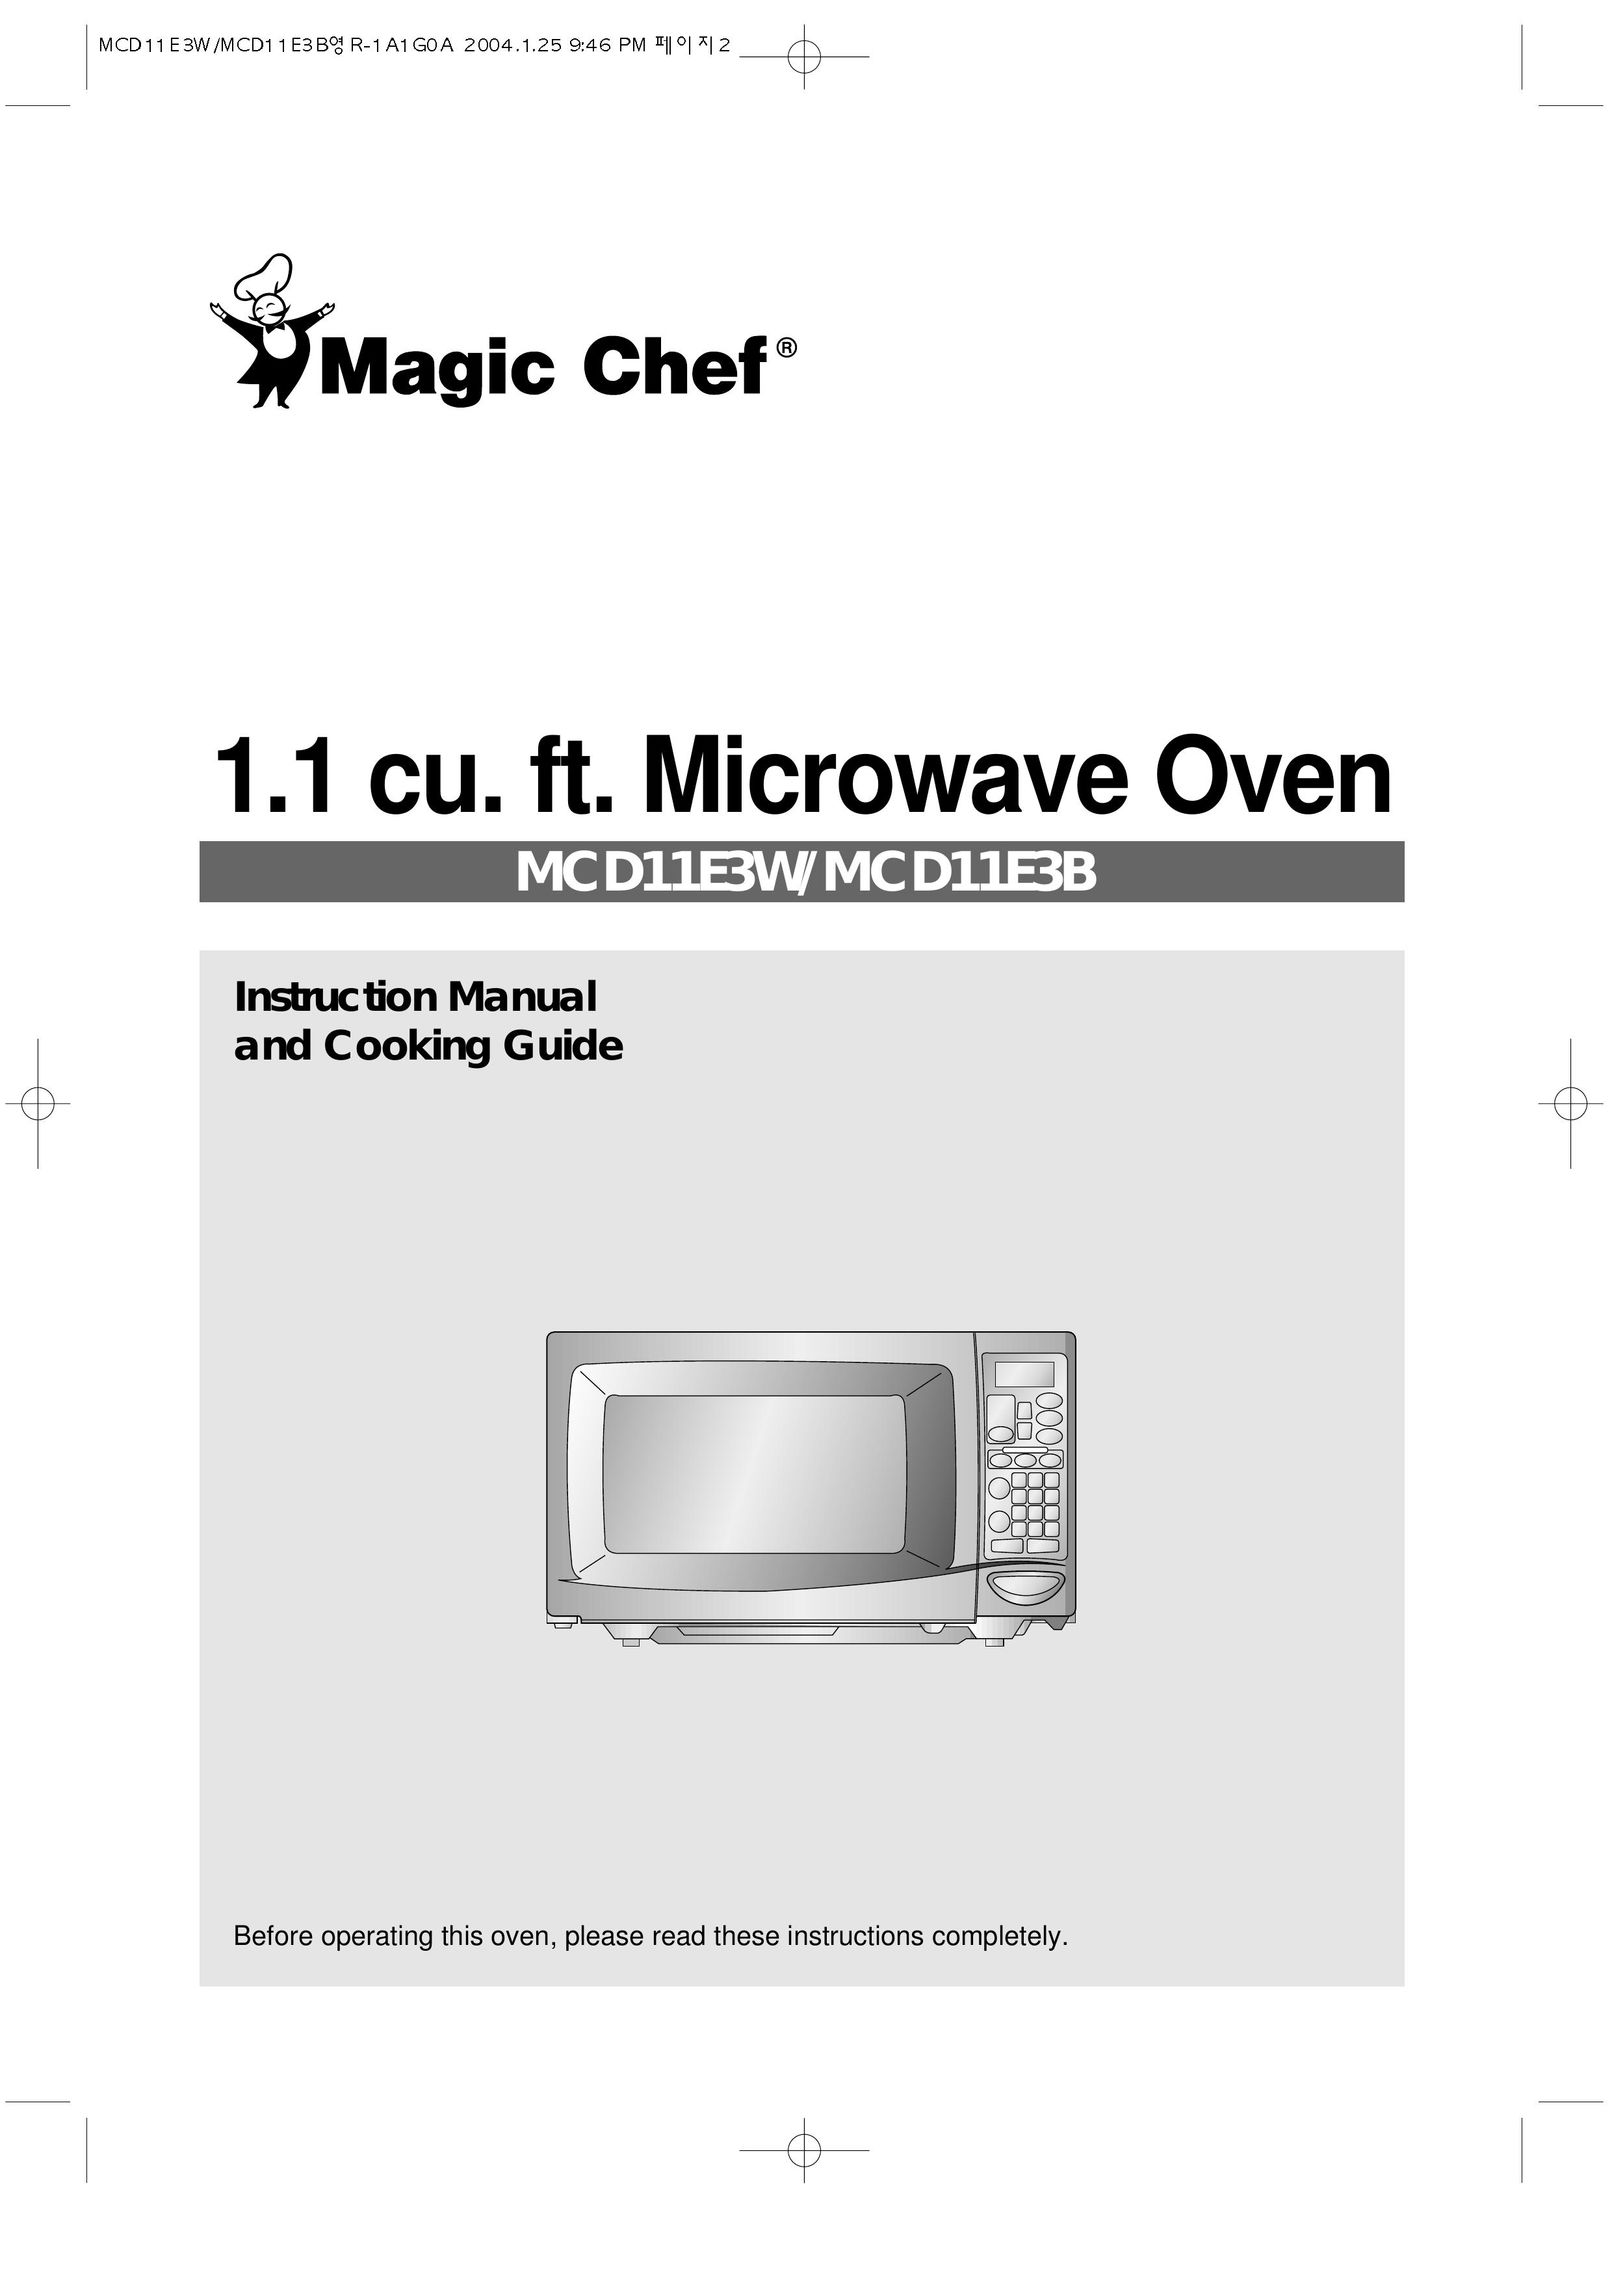 Magic Chef MCD11E3B Microwave Oven User Manual